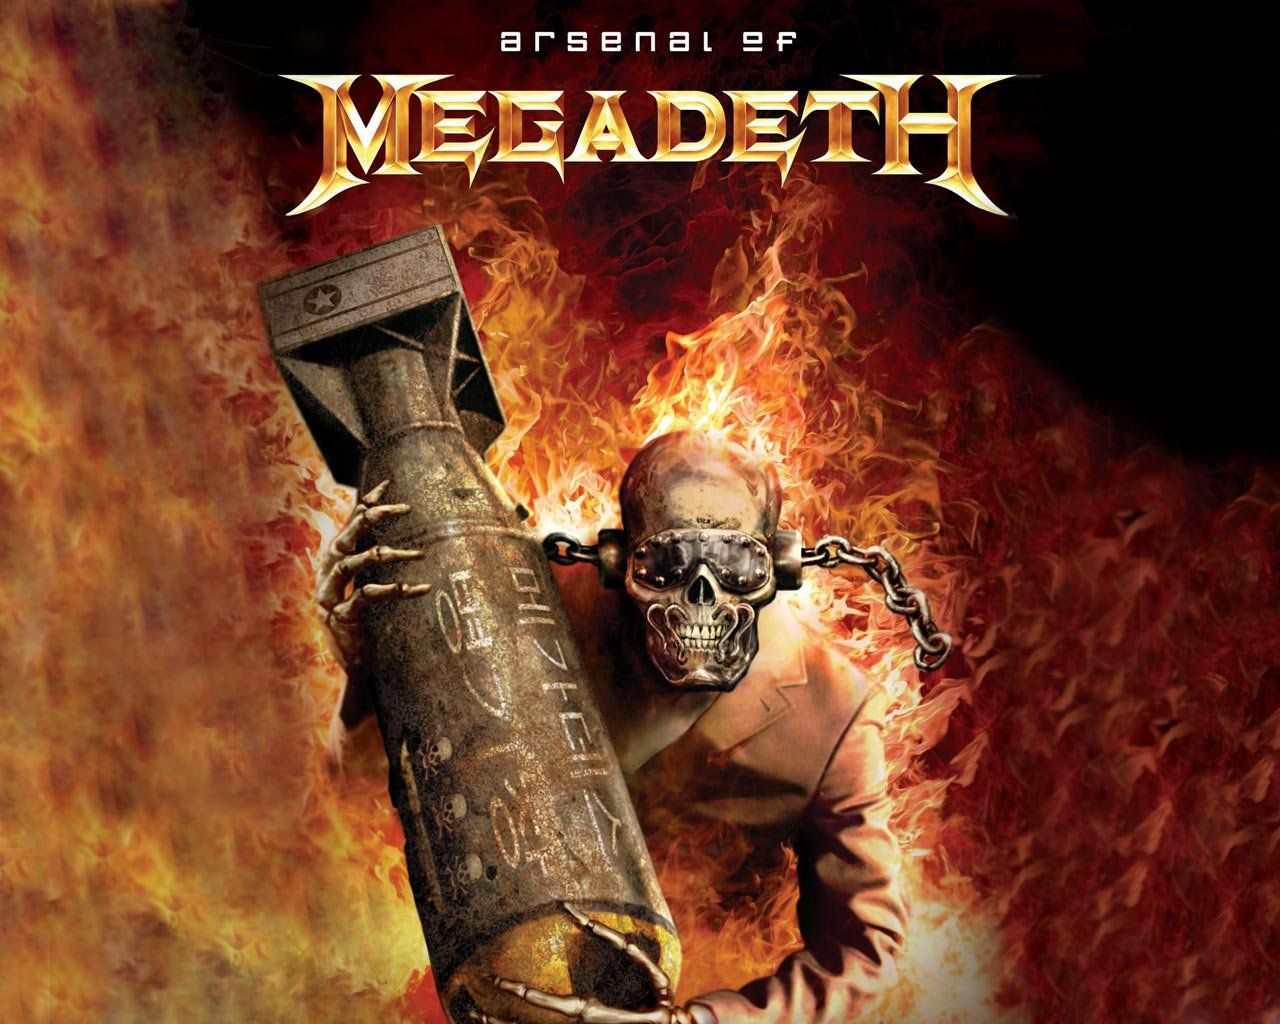 Heavy Metal Bands Megadeth Arsenal Of Wallpaper